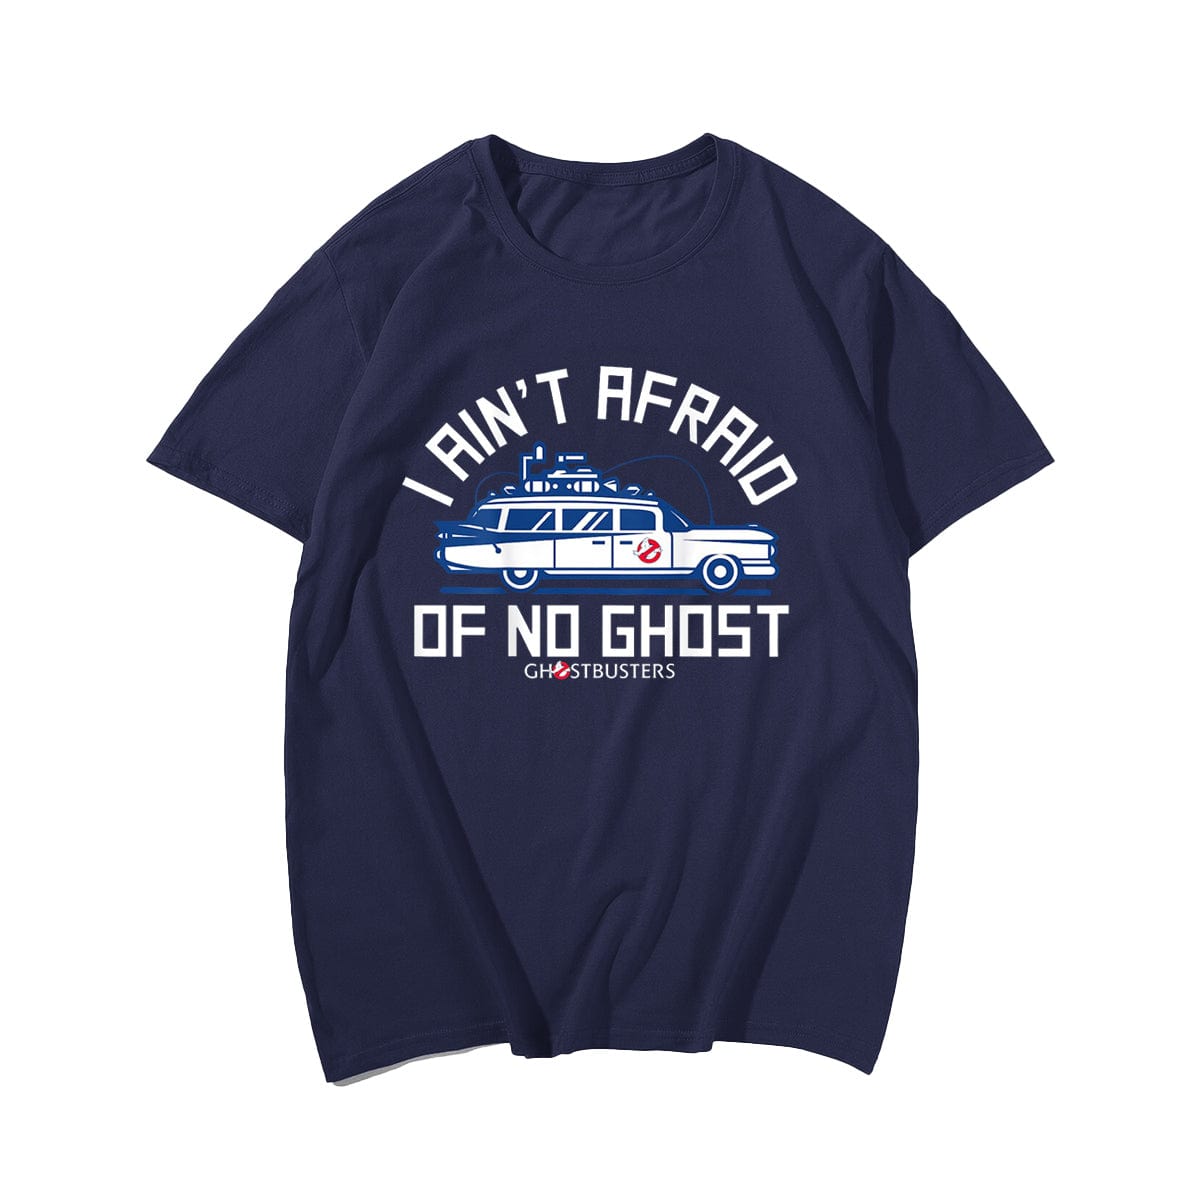 I Ain't Afraid of No Ghost Men's Plus Size T-shirt